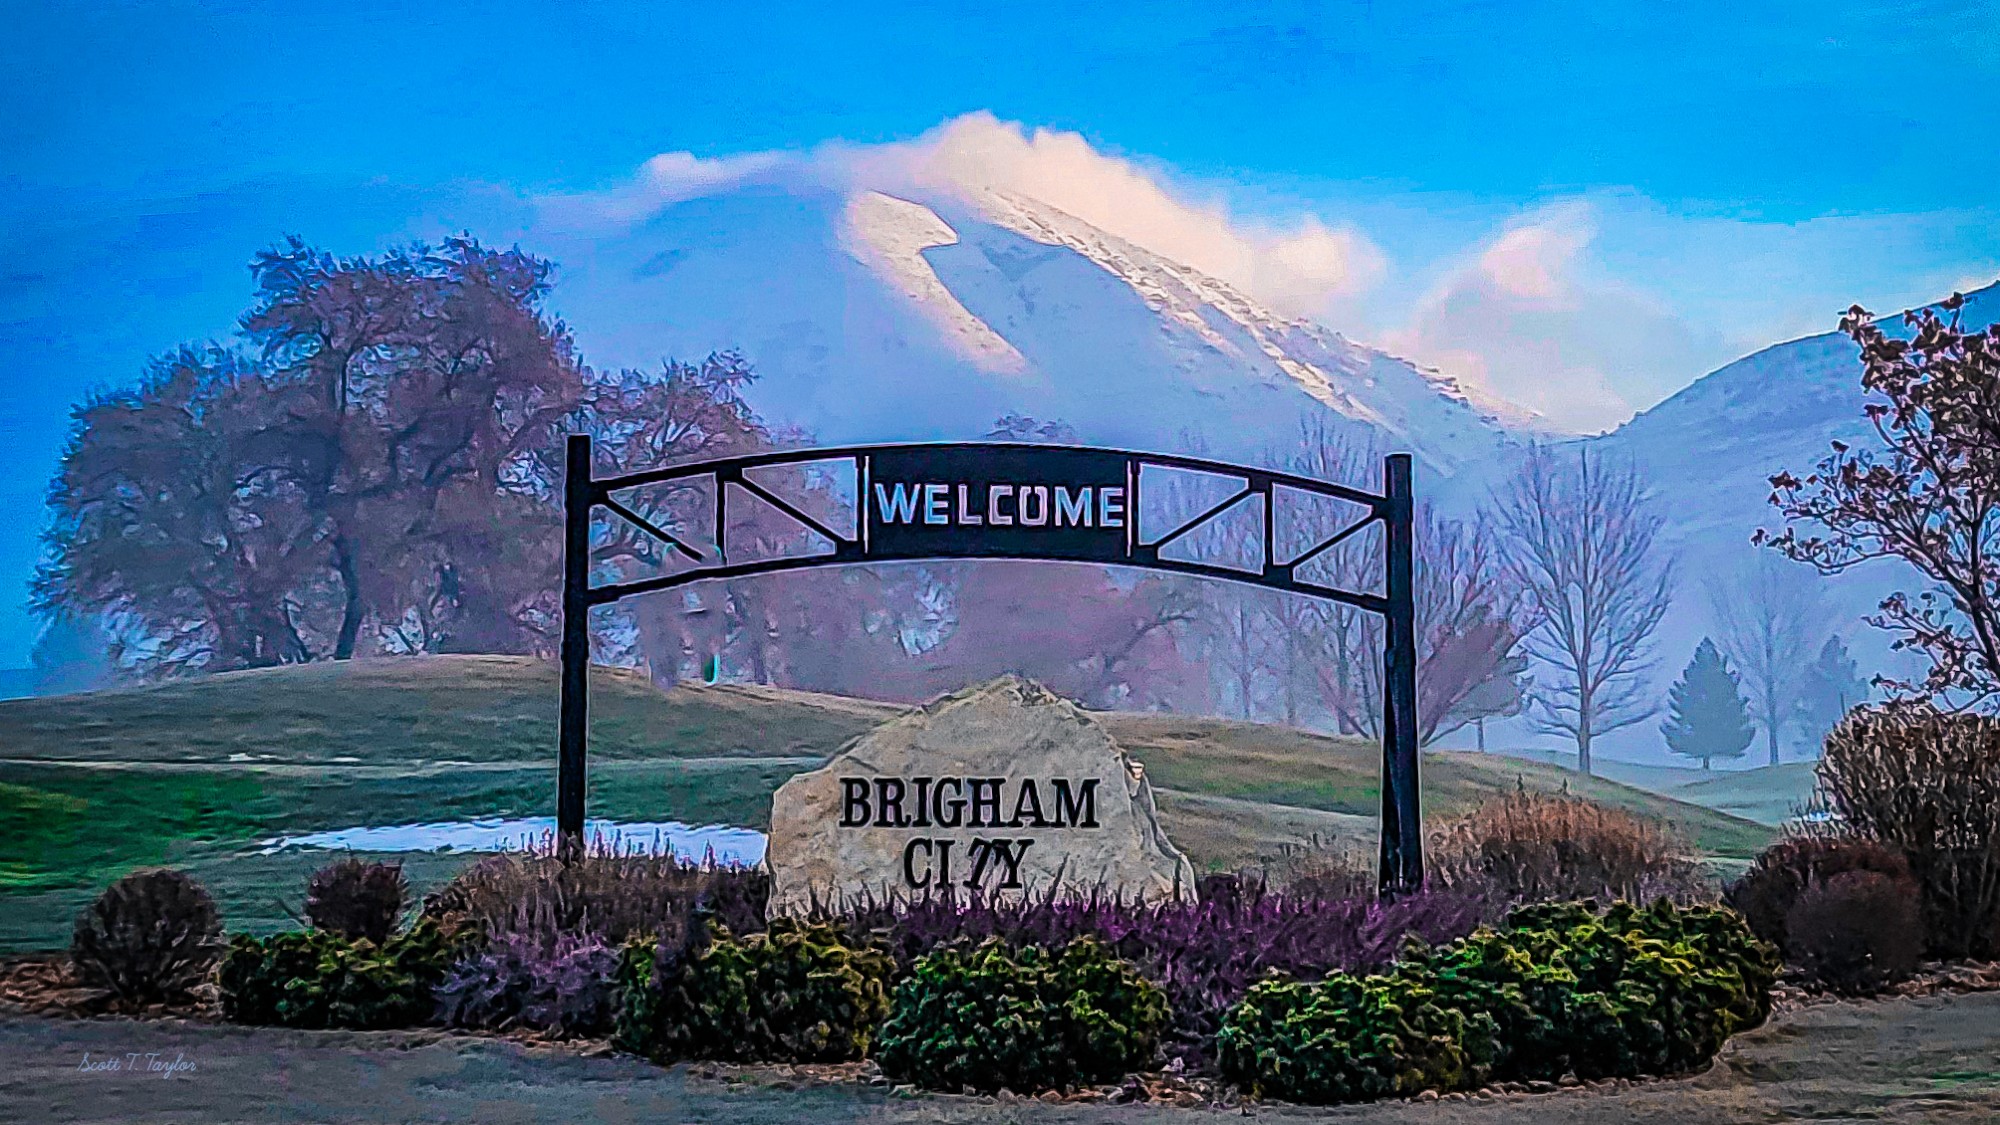 Entering Brigham City Utah,  you're met with this beautiful scenery. (Scott Taylor)...